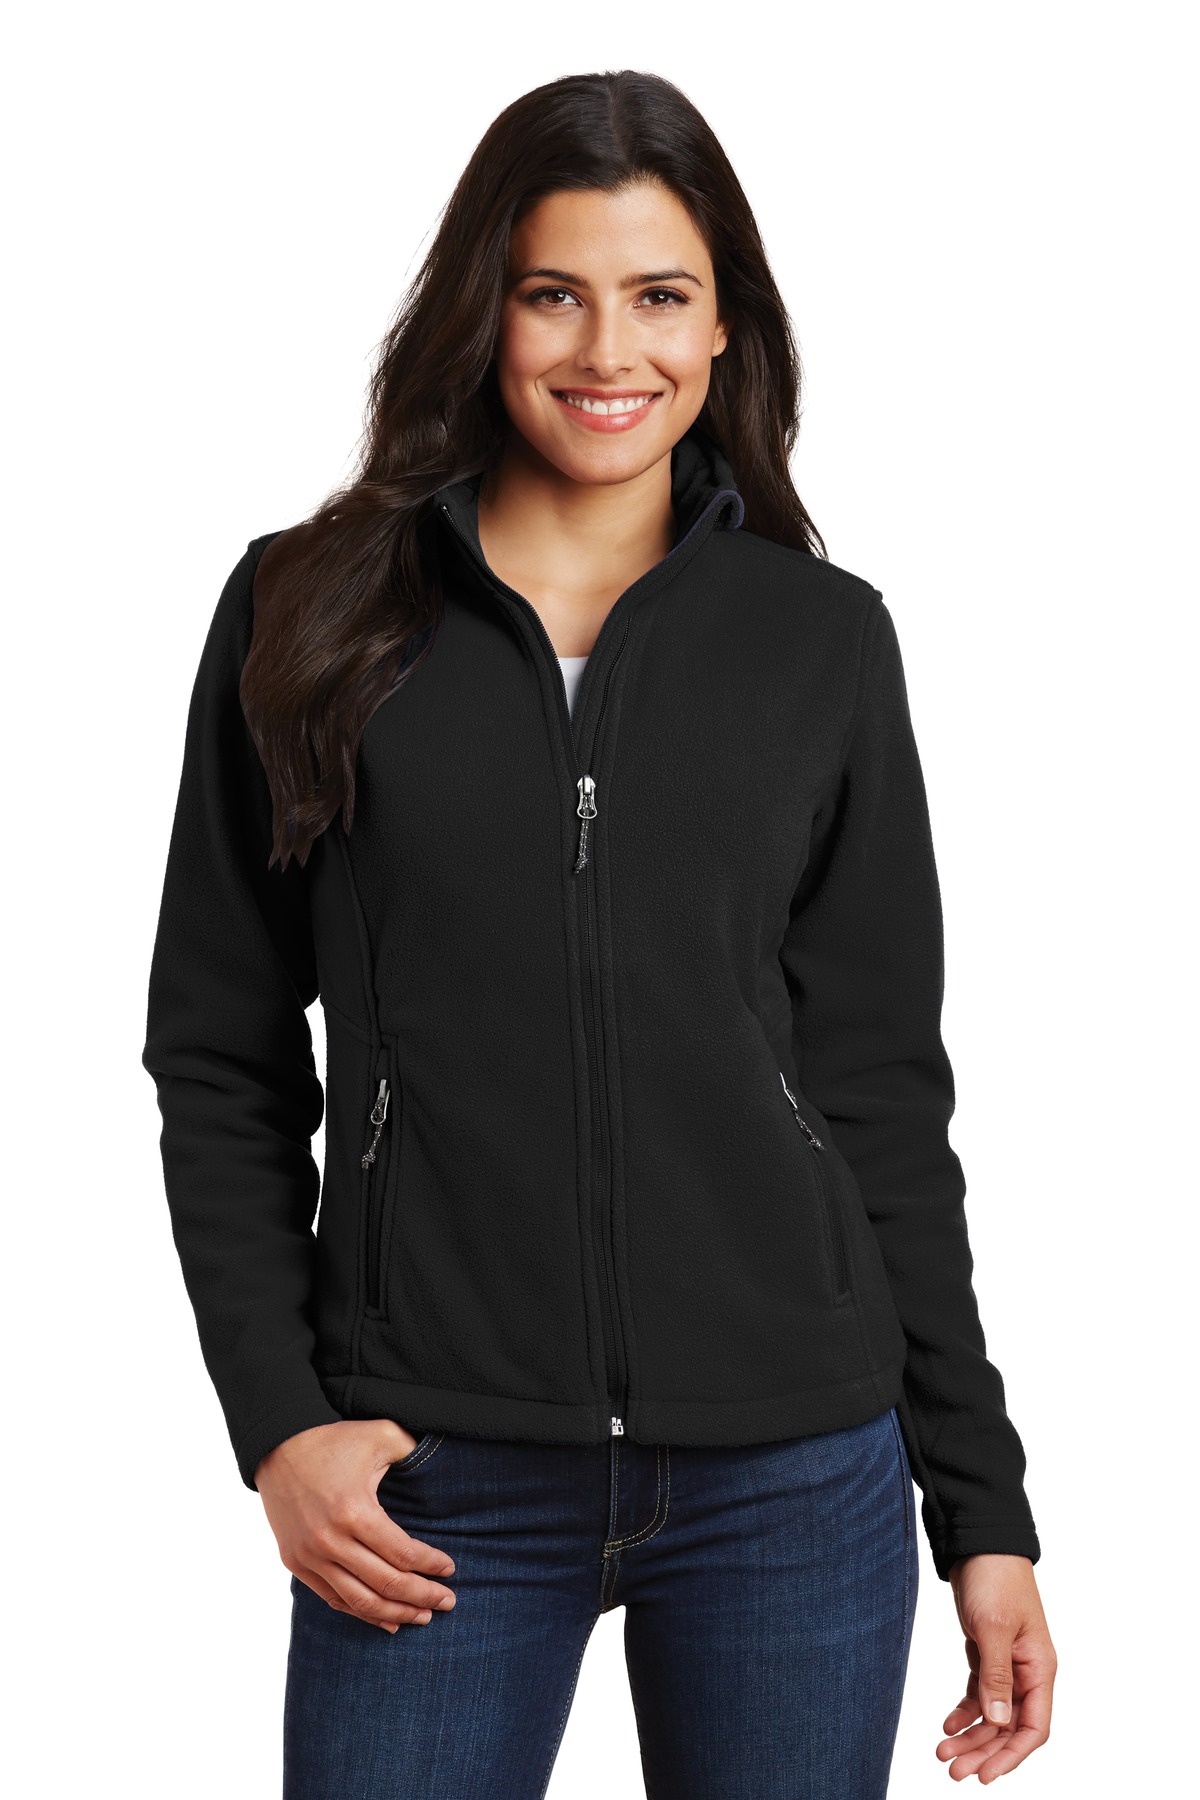 Port Authority Ladies Outerwear Sweatshirts & Fleece for Hospitality ® Ladies Value Fleece Jacket.-Port Authority